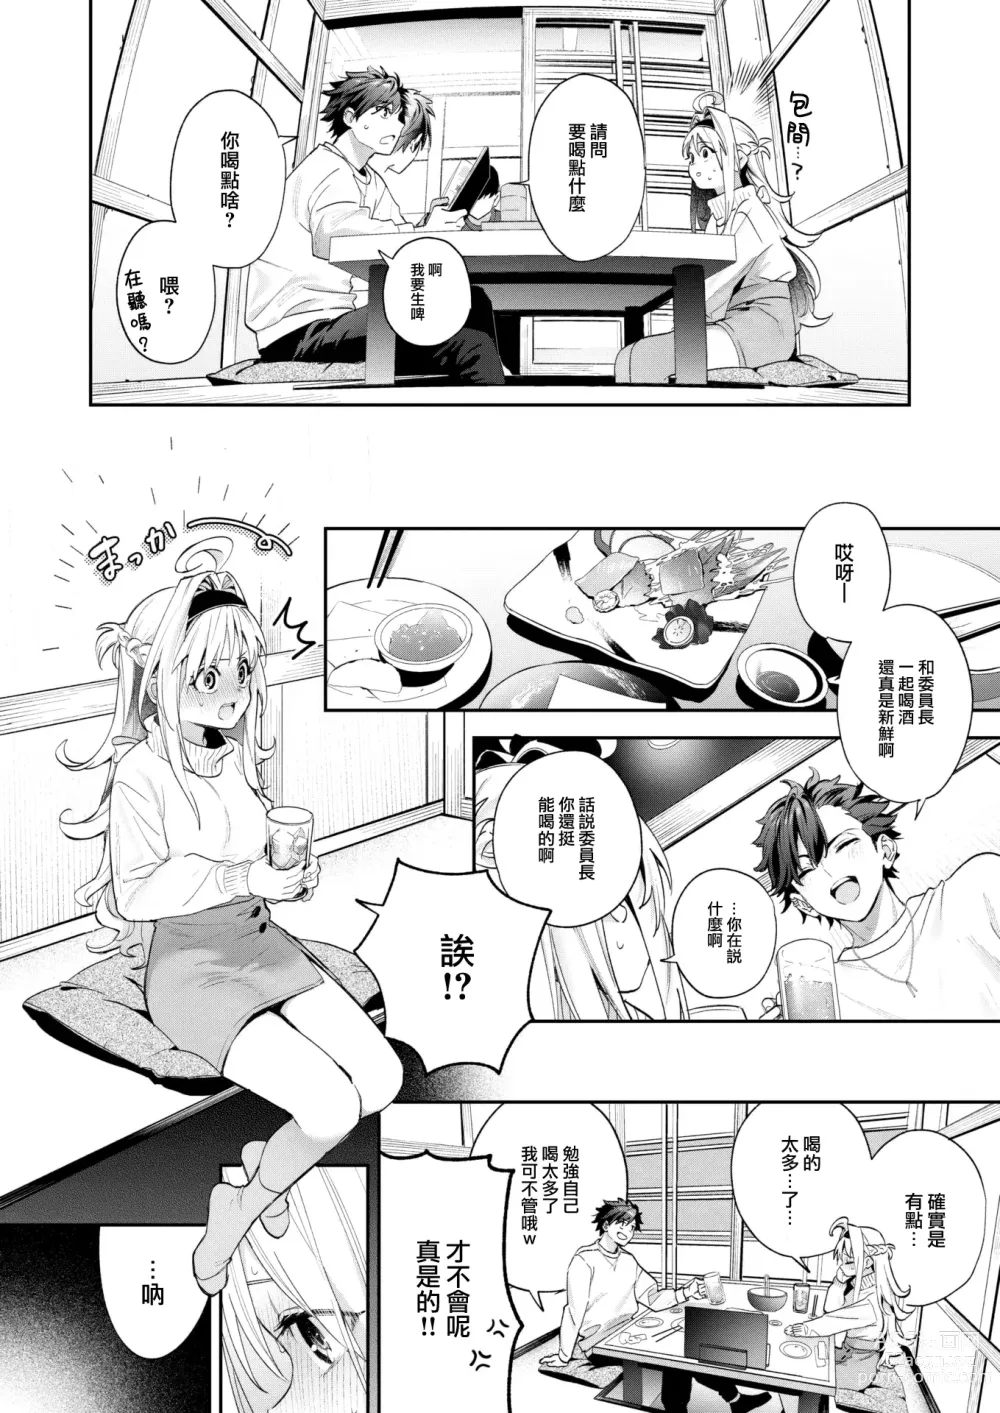 Page 9 of manga melting snow